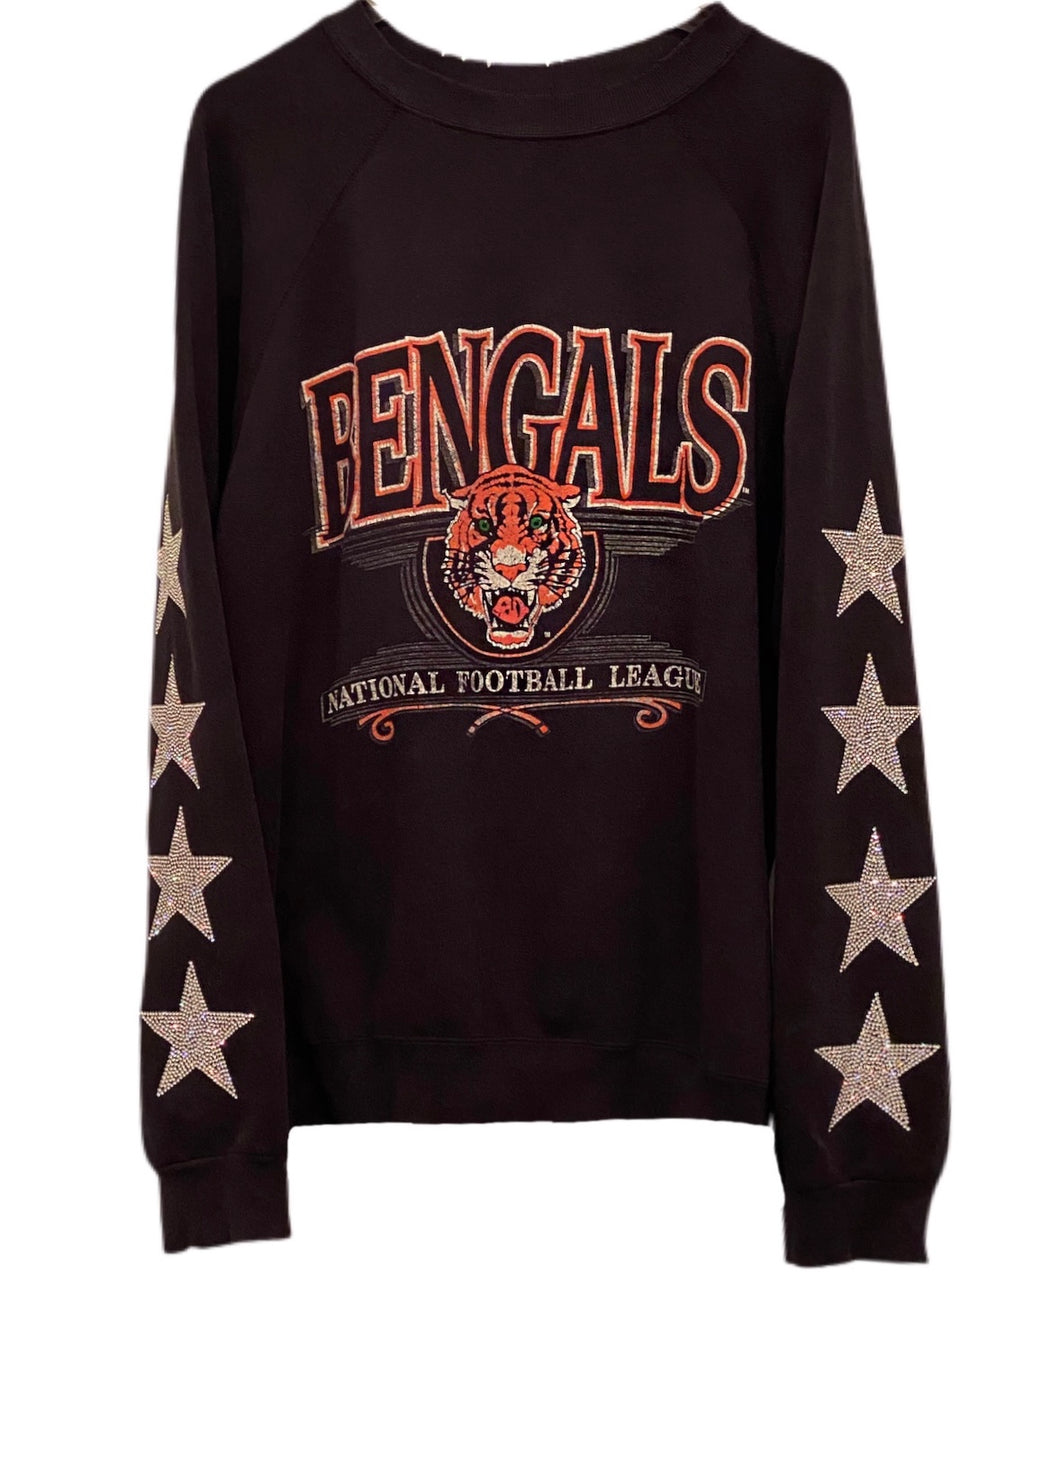 Cincinnati Bengals, NFL One of a KIND Vintage Four Sweatshirt with Crystal Star Design